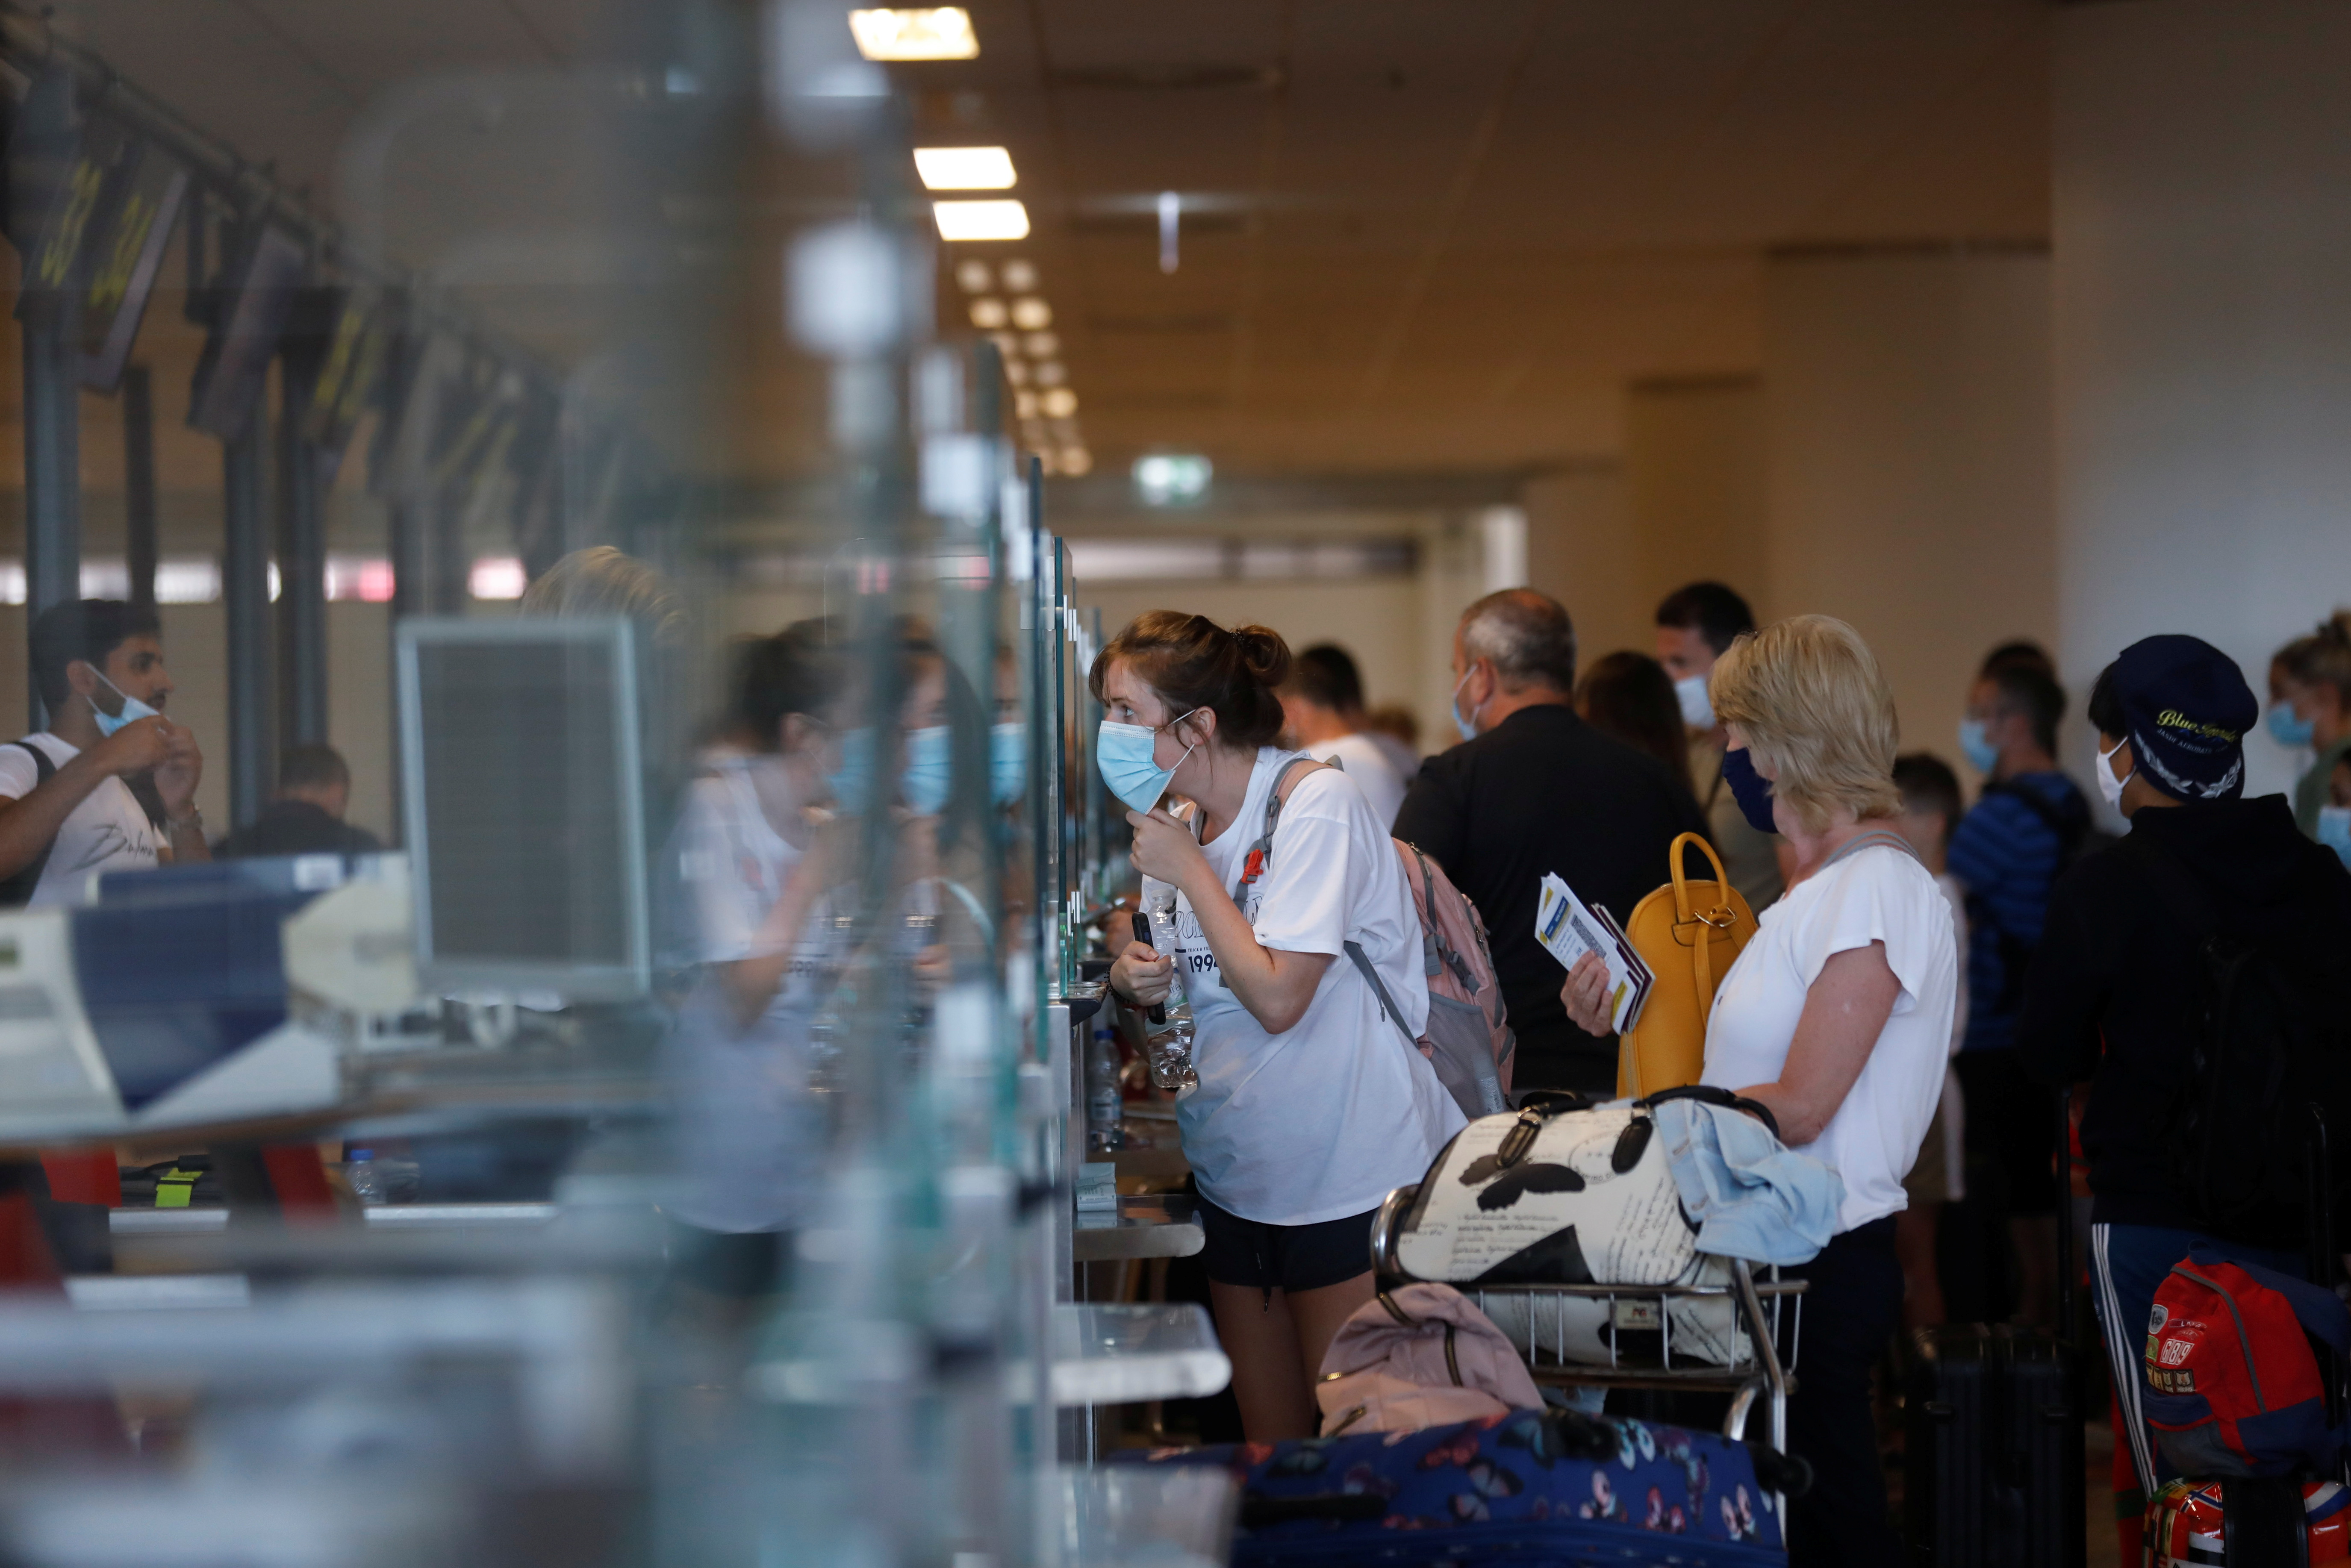 People queue at check in desks at Faro airport amid the coronavirus disease (COVID-19) pandemic, in Faro, Portugal, June 7, 2021. REUTERS/Pedro Nunes